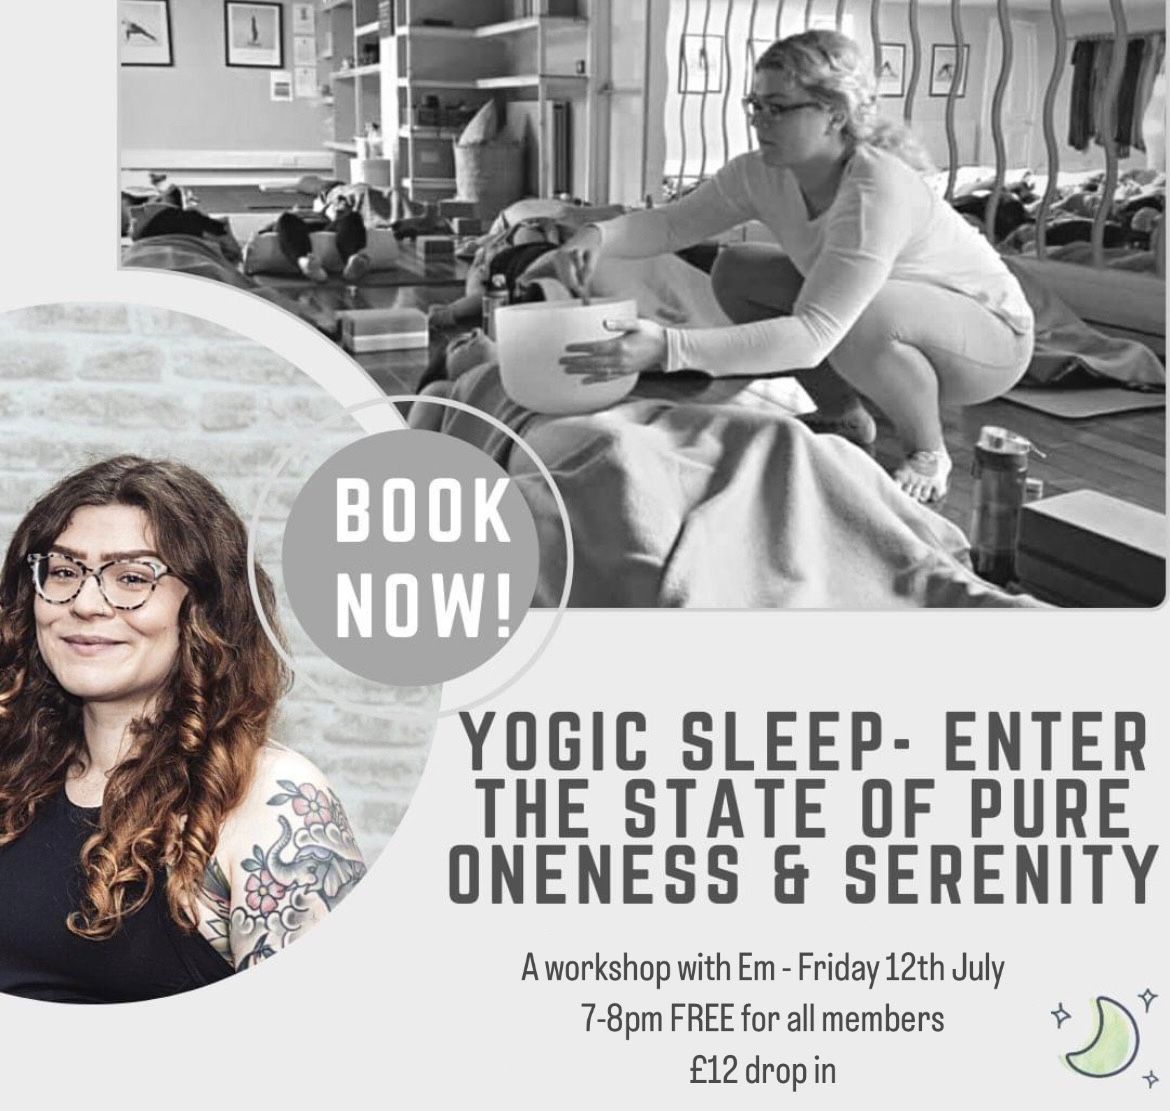 Yogic sleep- a state of oneness 